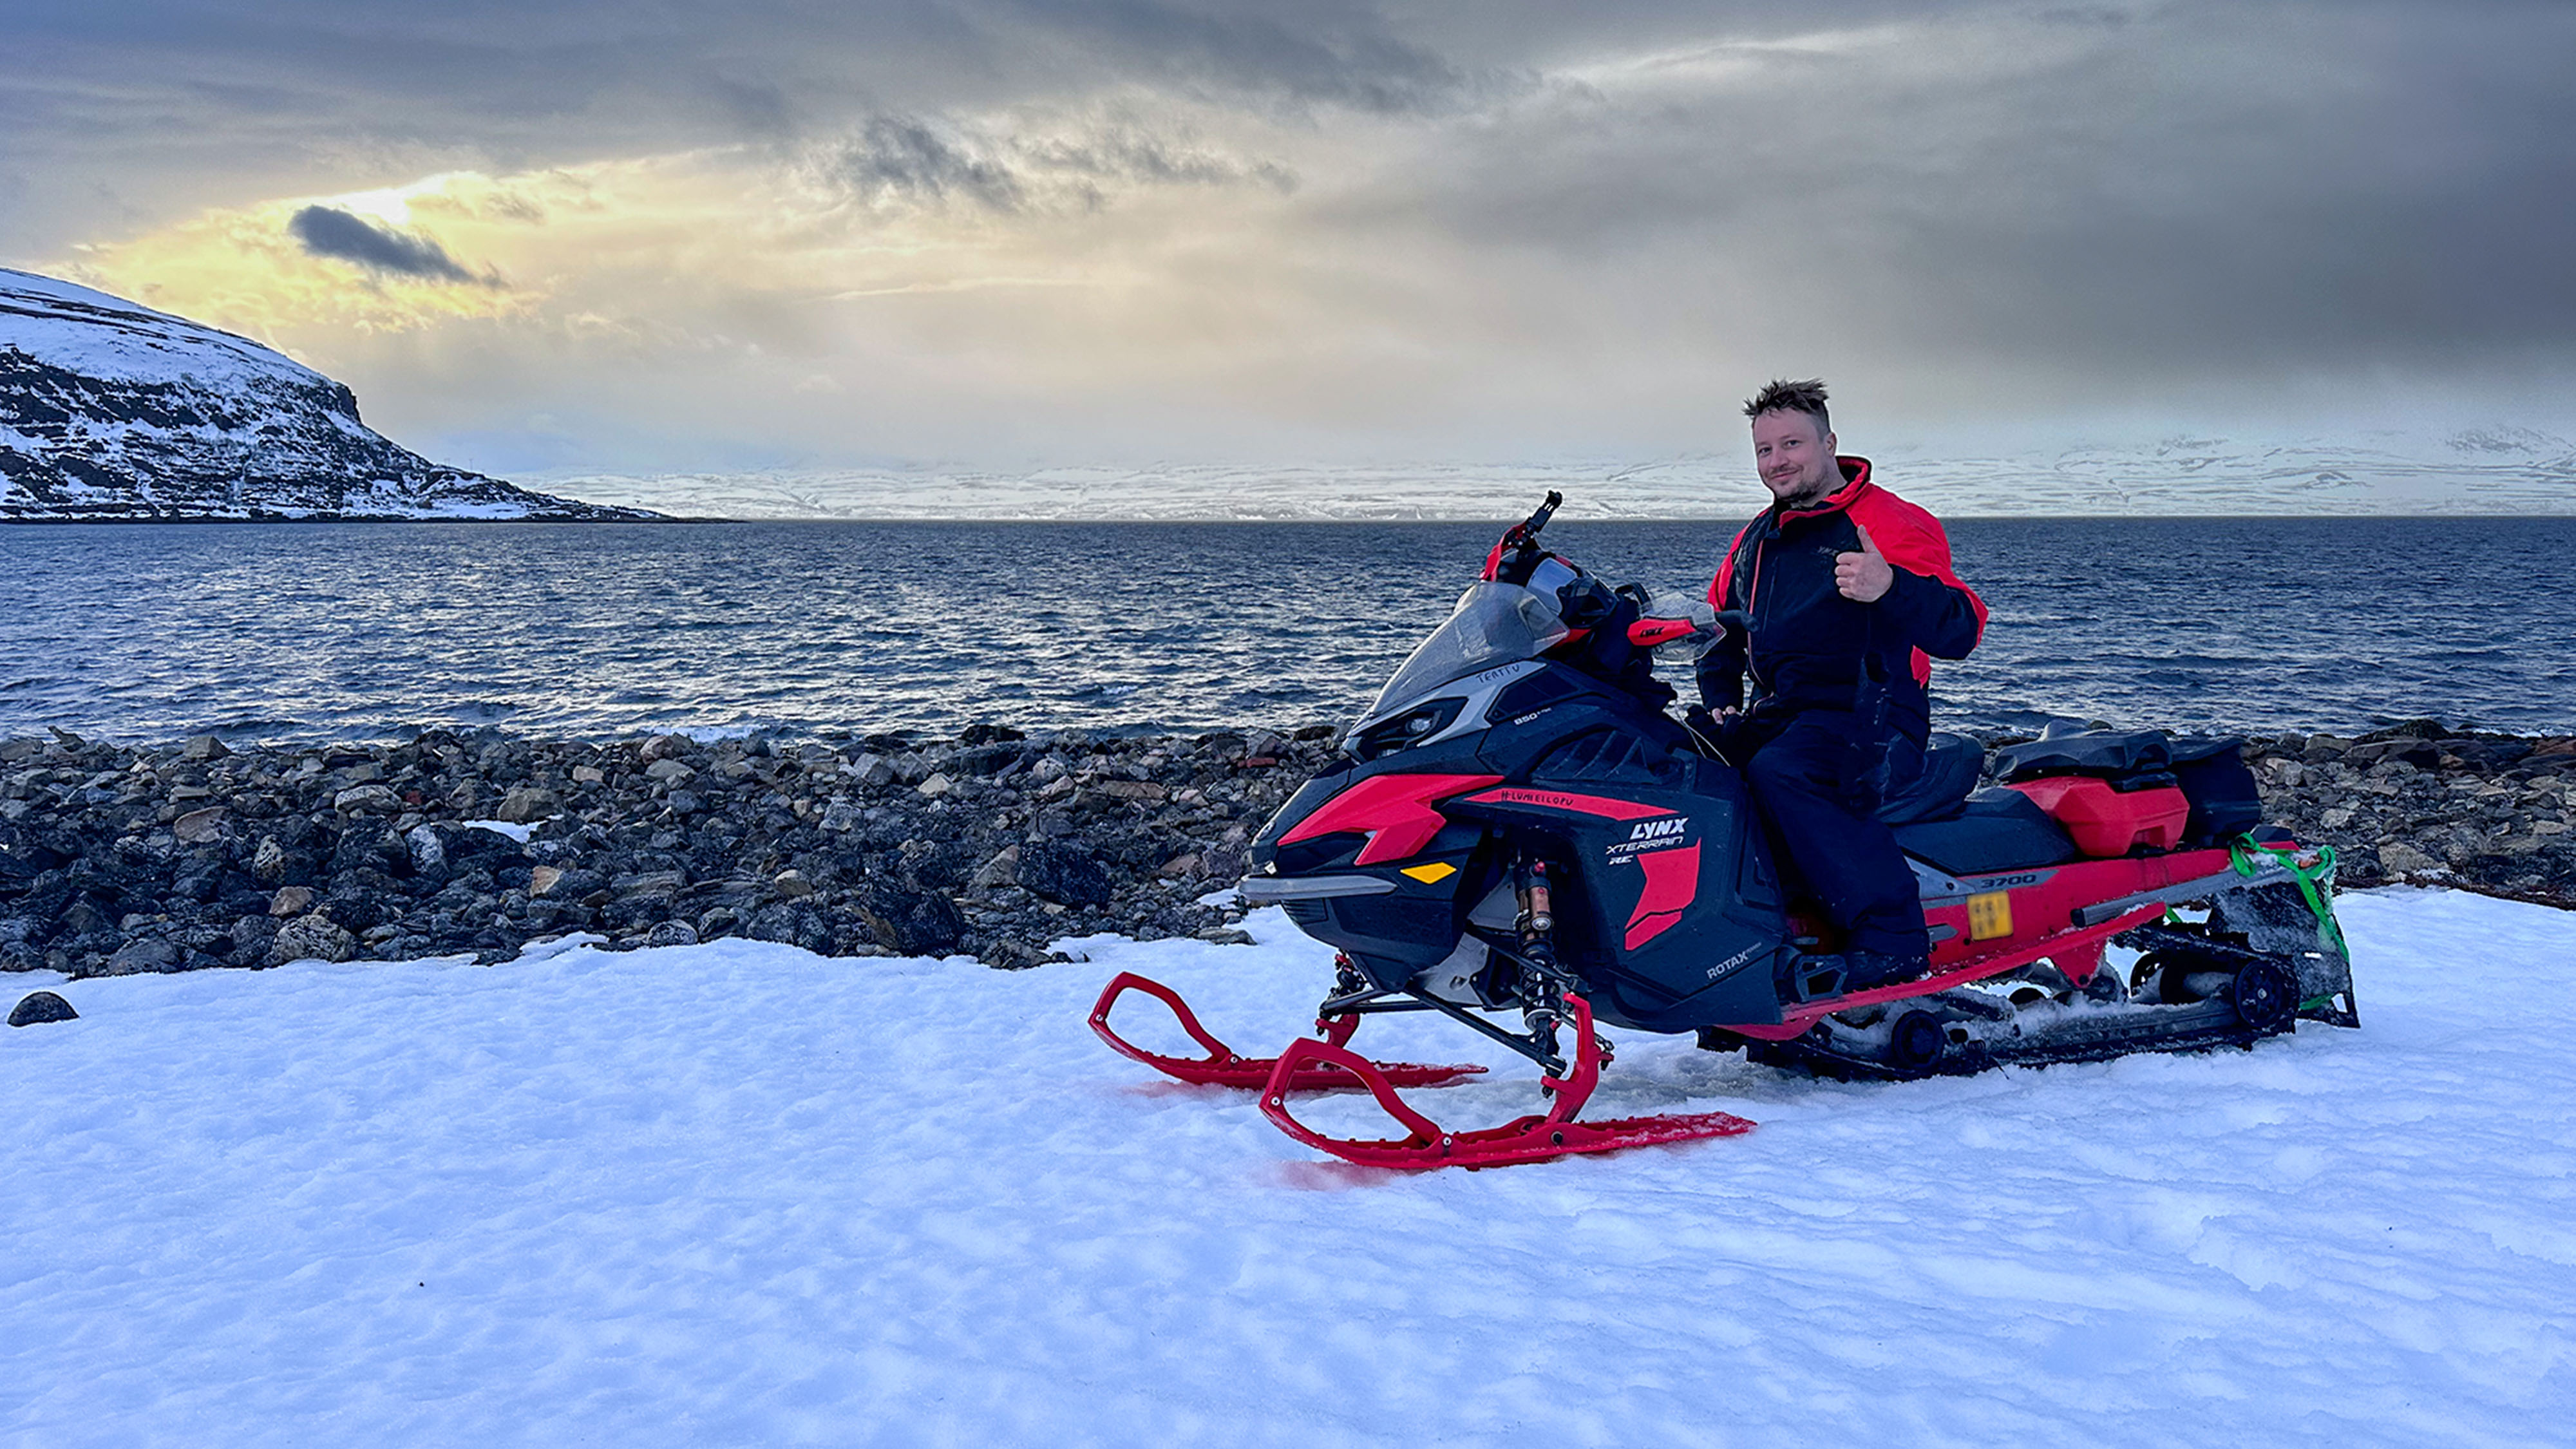 Joni Maununen sitting on his Lynx snowmobile next to the Arctic Ocean